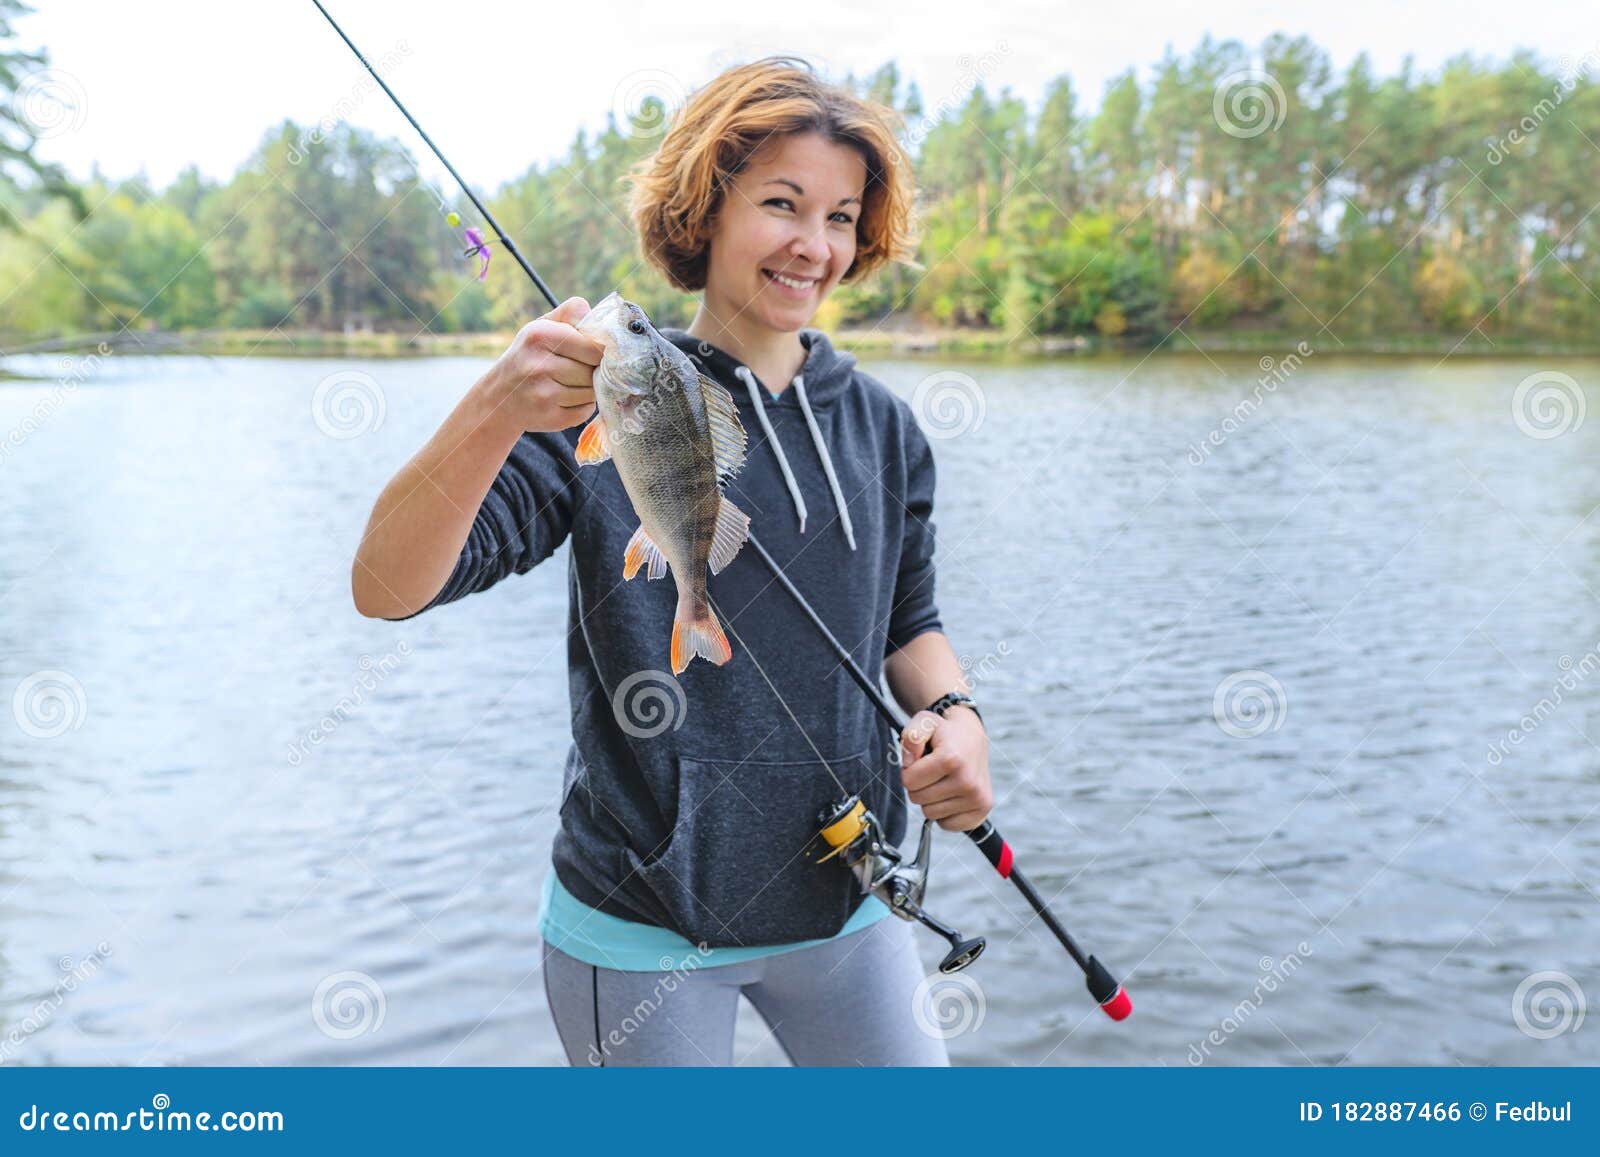 Success Perch Fishing. Lady Fisherwoman with Fish at Lake Stock